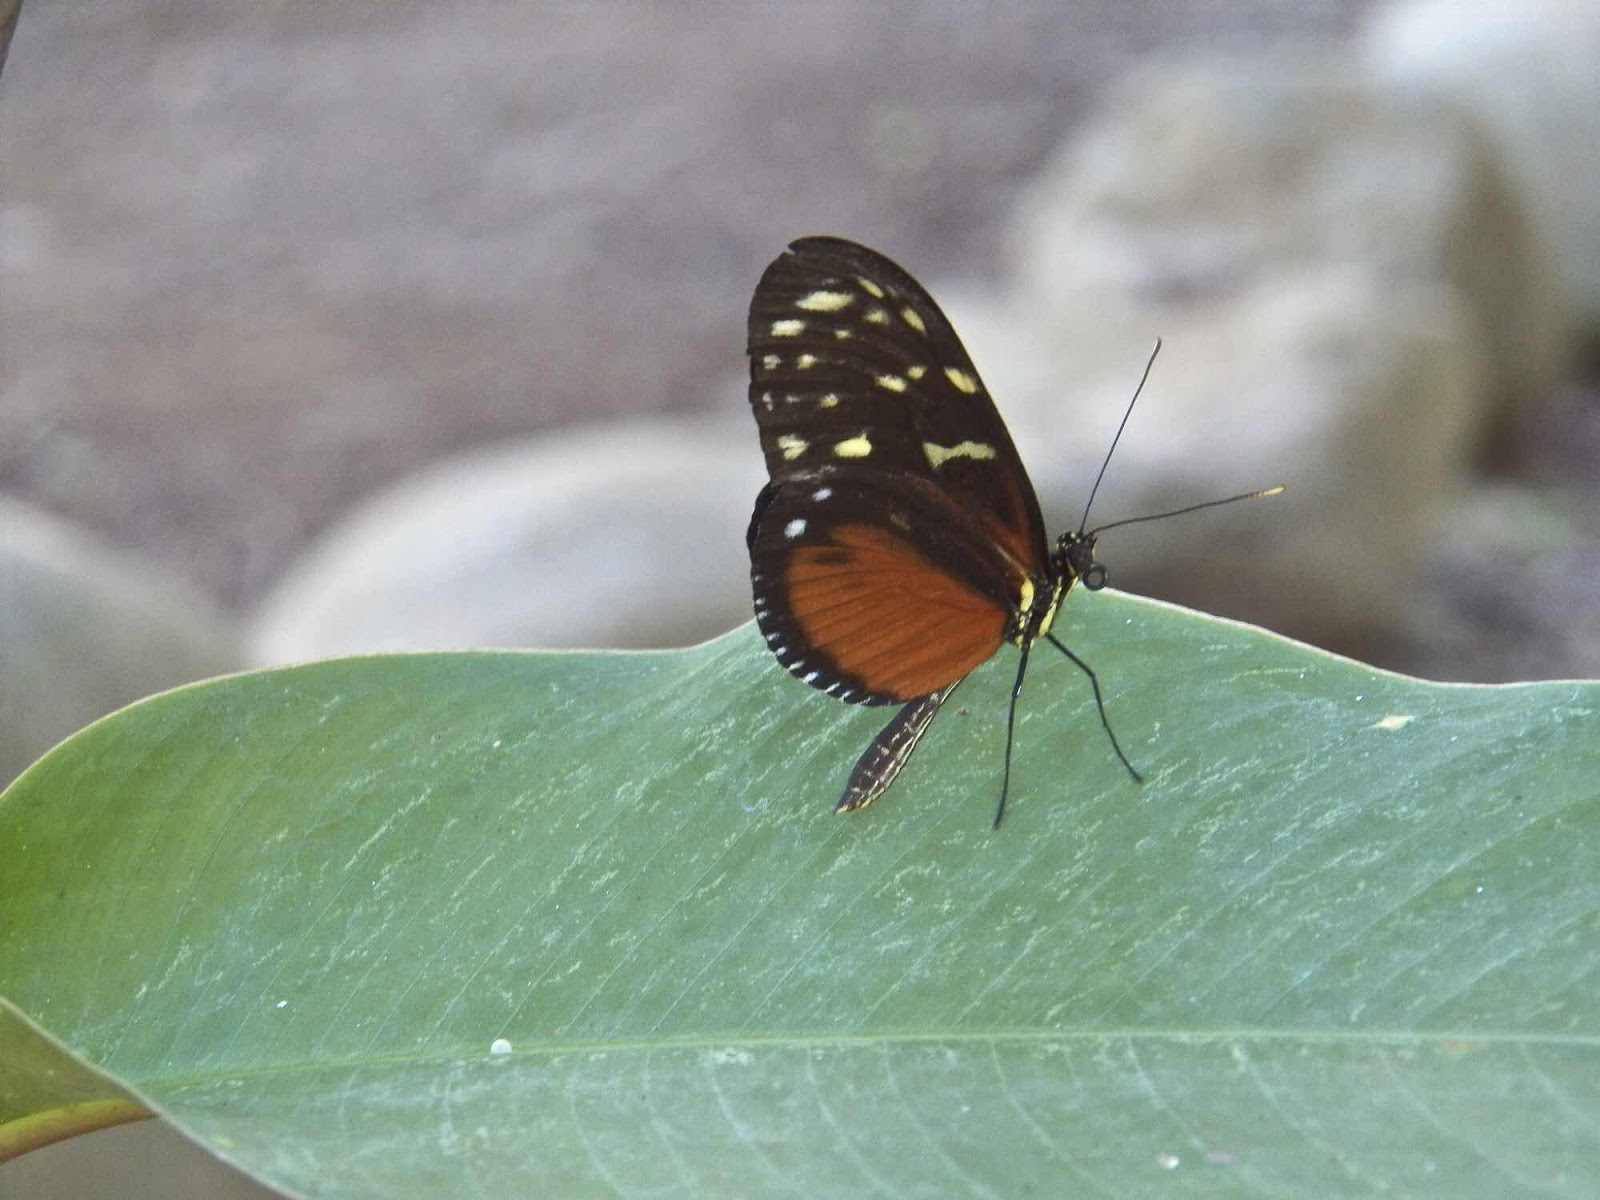 Butterfly, Refugio Nacional de Vida Sylvestre Barù, Costa Rica